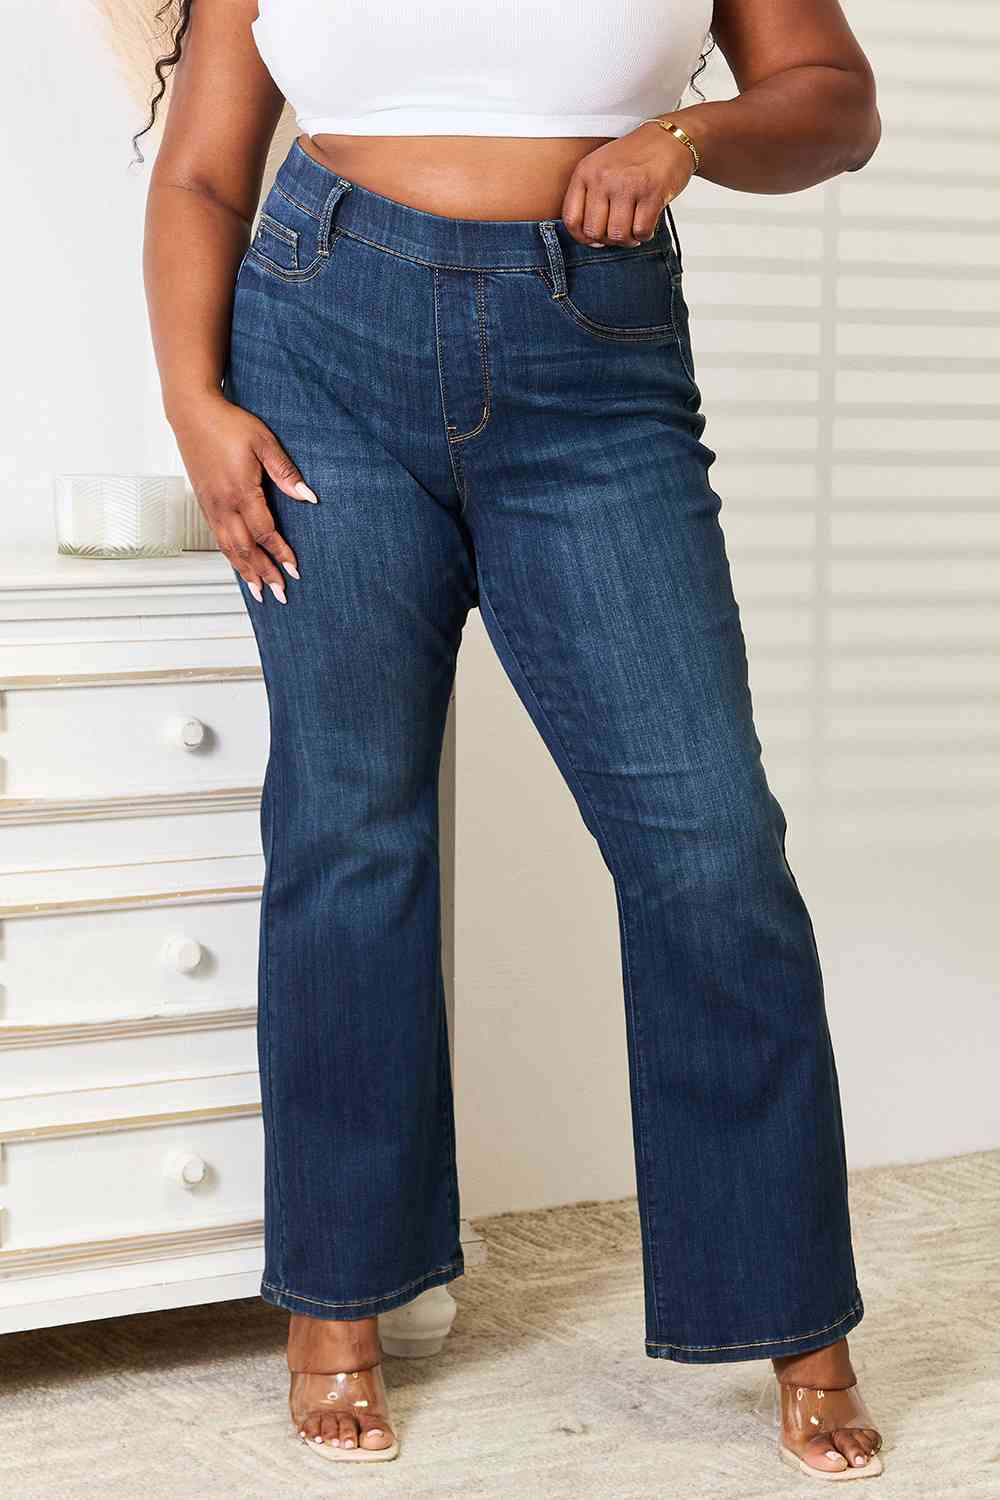 Judy Blue Jupiter Elastic Waistband Slim Bootcut Jeans